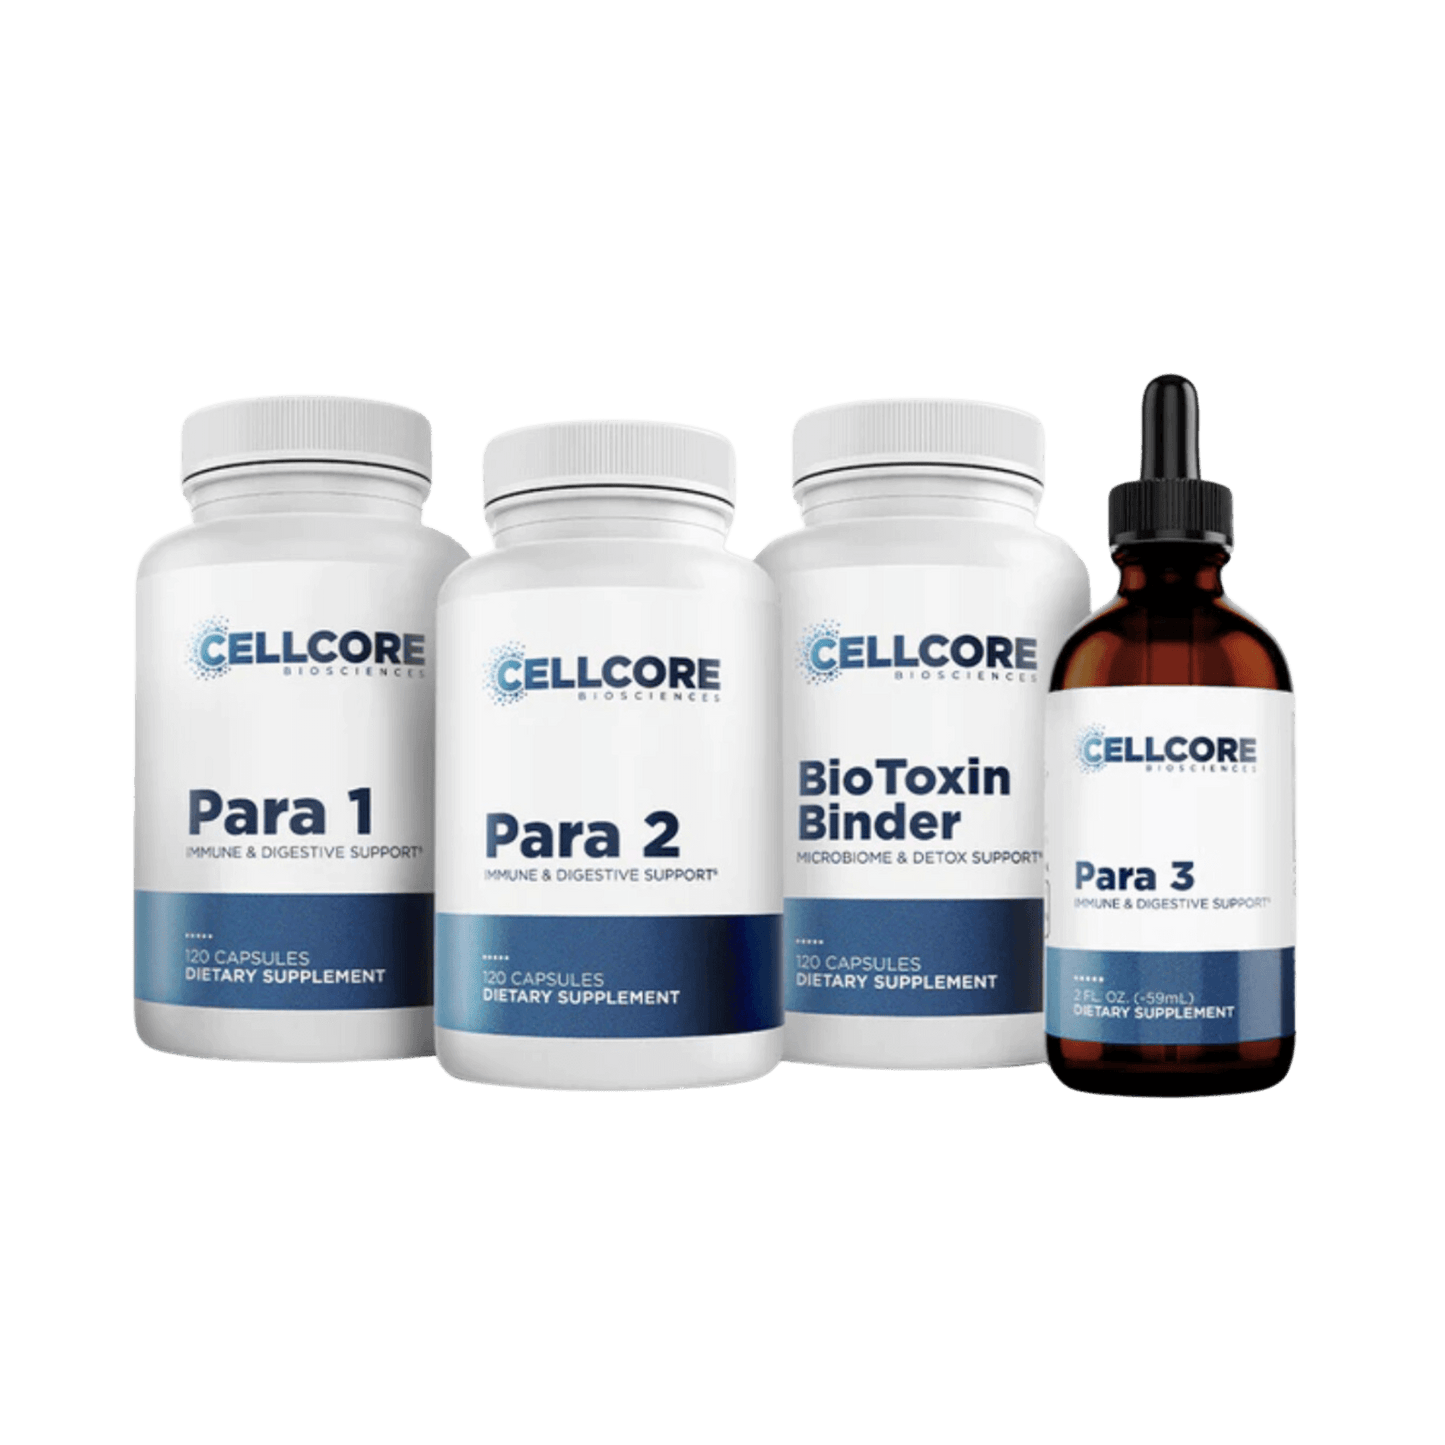 Image of Cellcore Para Kit Detox supplement bottles